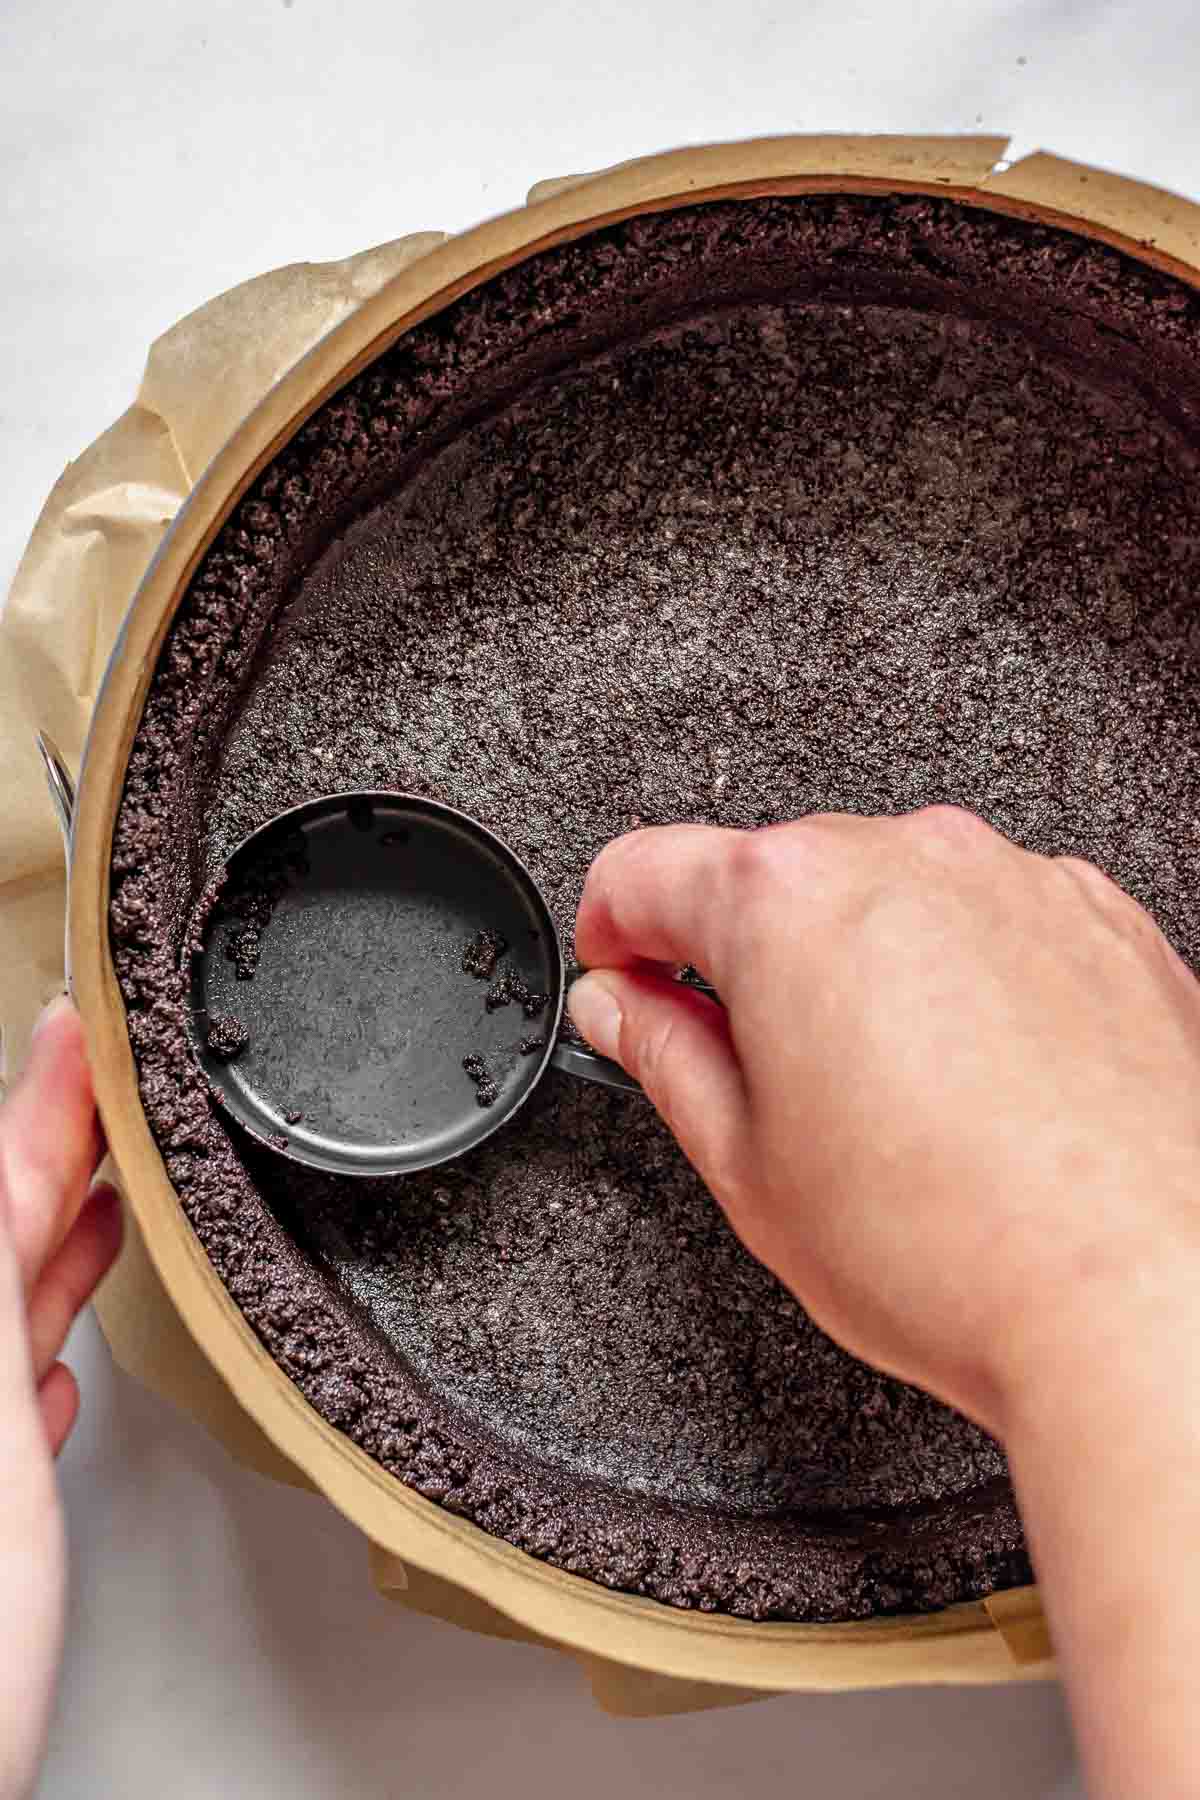 Pressing oreo crumbs into a springform pan.